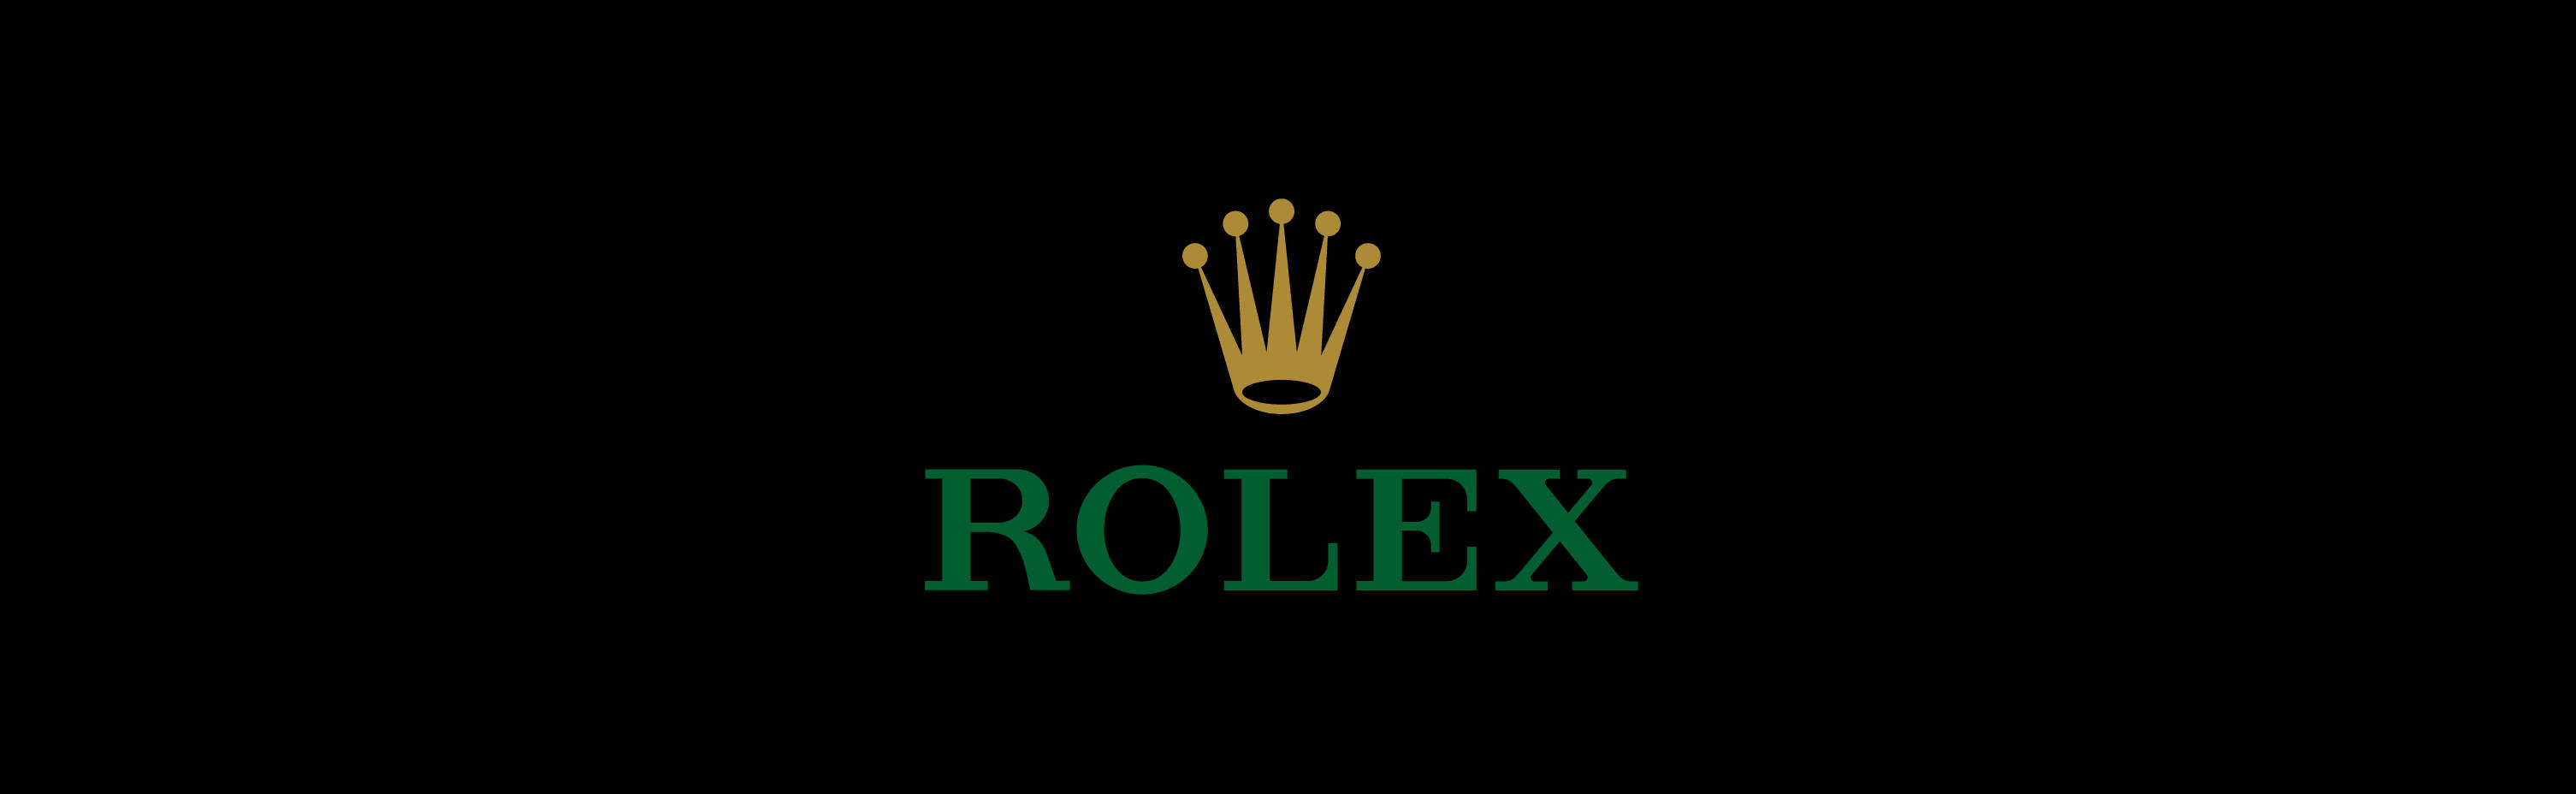 Ikoniskagröna Rolex-logotypen. Wallpaper